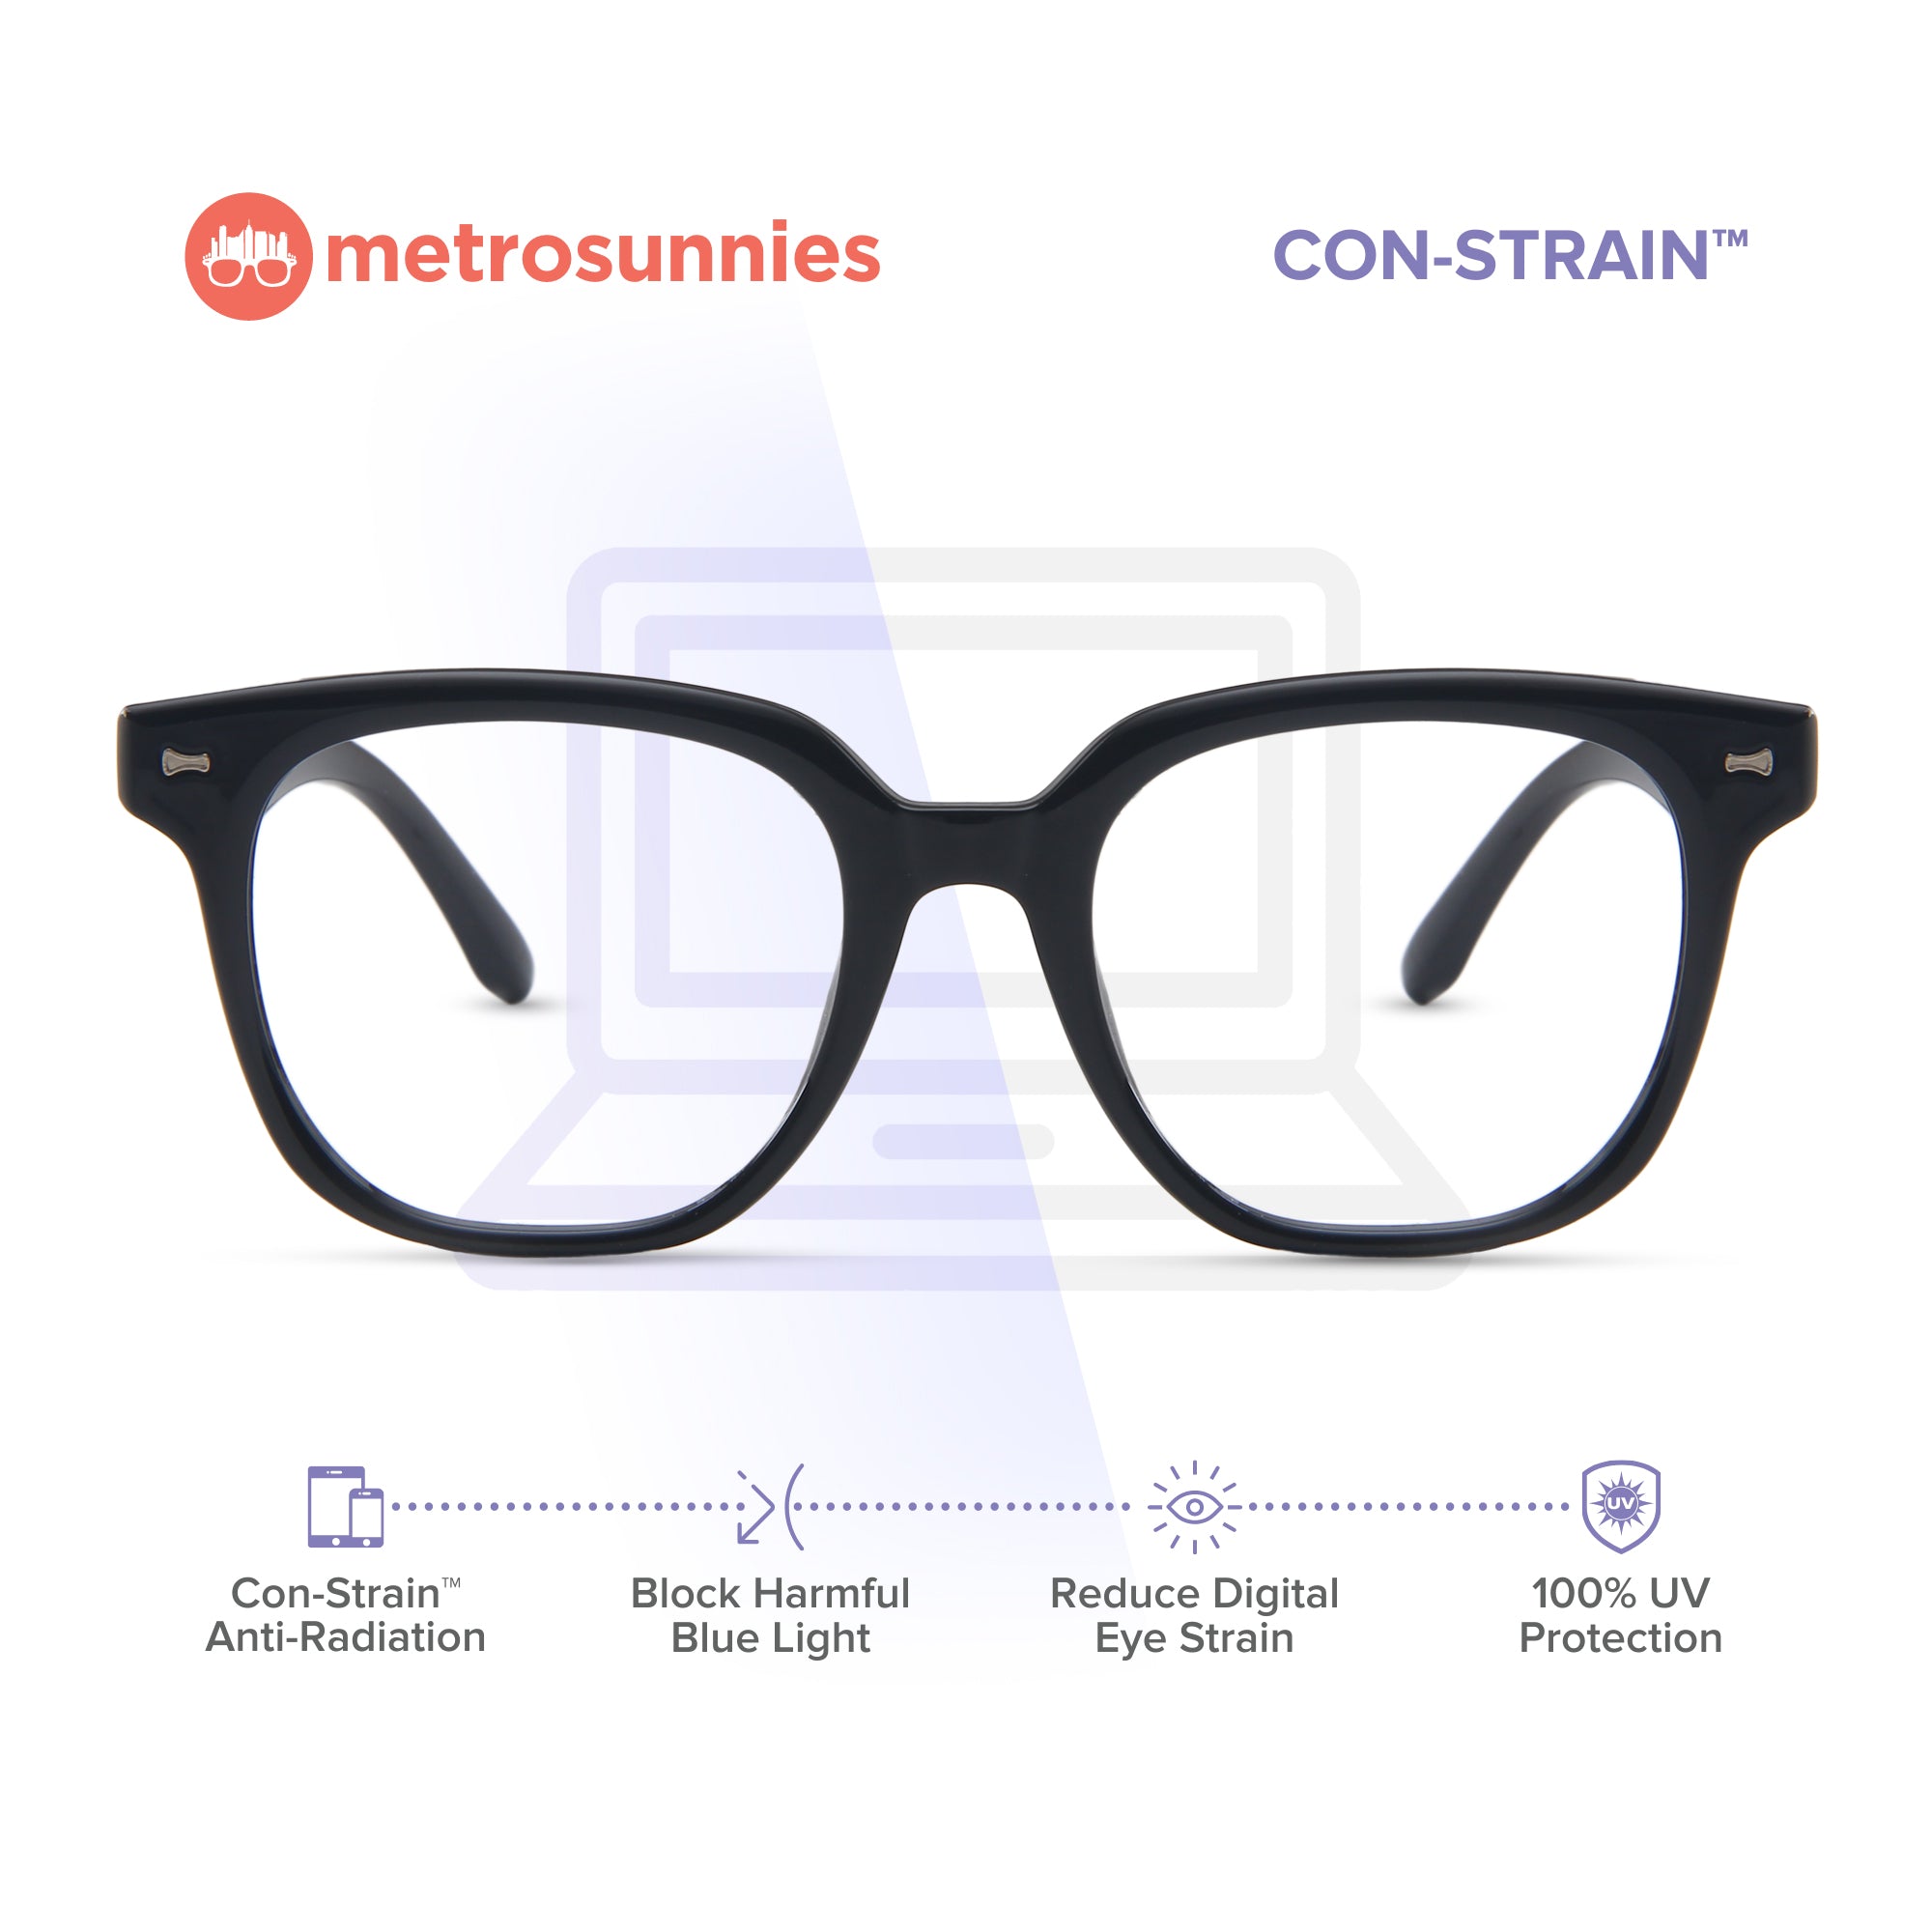 MetroSunnies Percey Specs (Black) Con-Strain Anti Radiation Eyeglasses Women Men Blue Light Eyewear